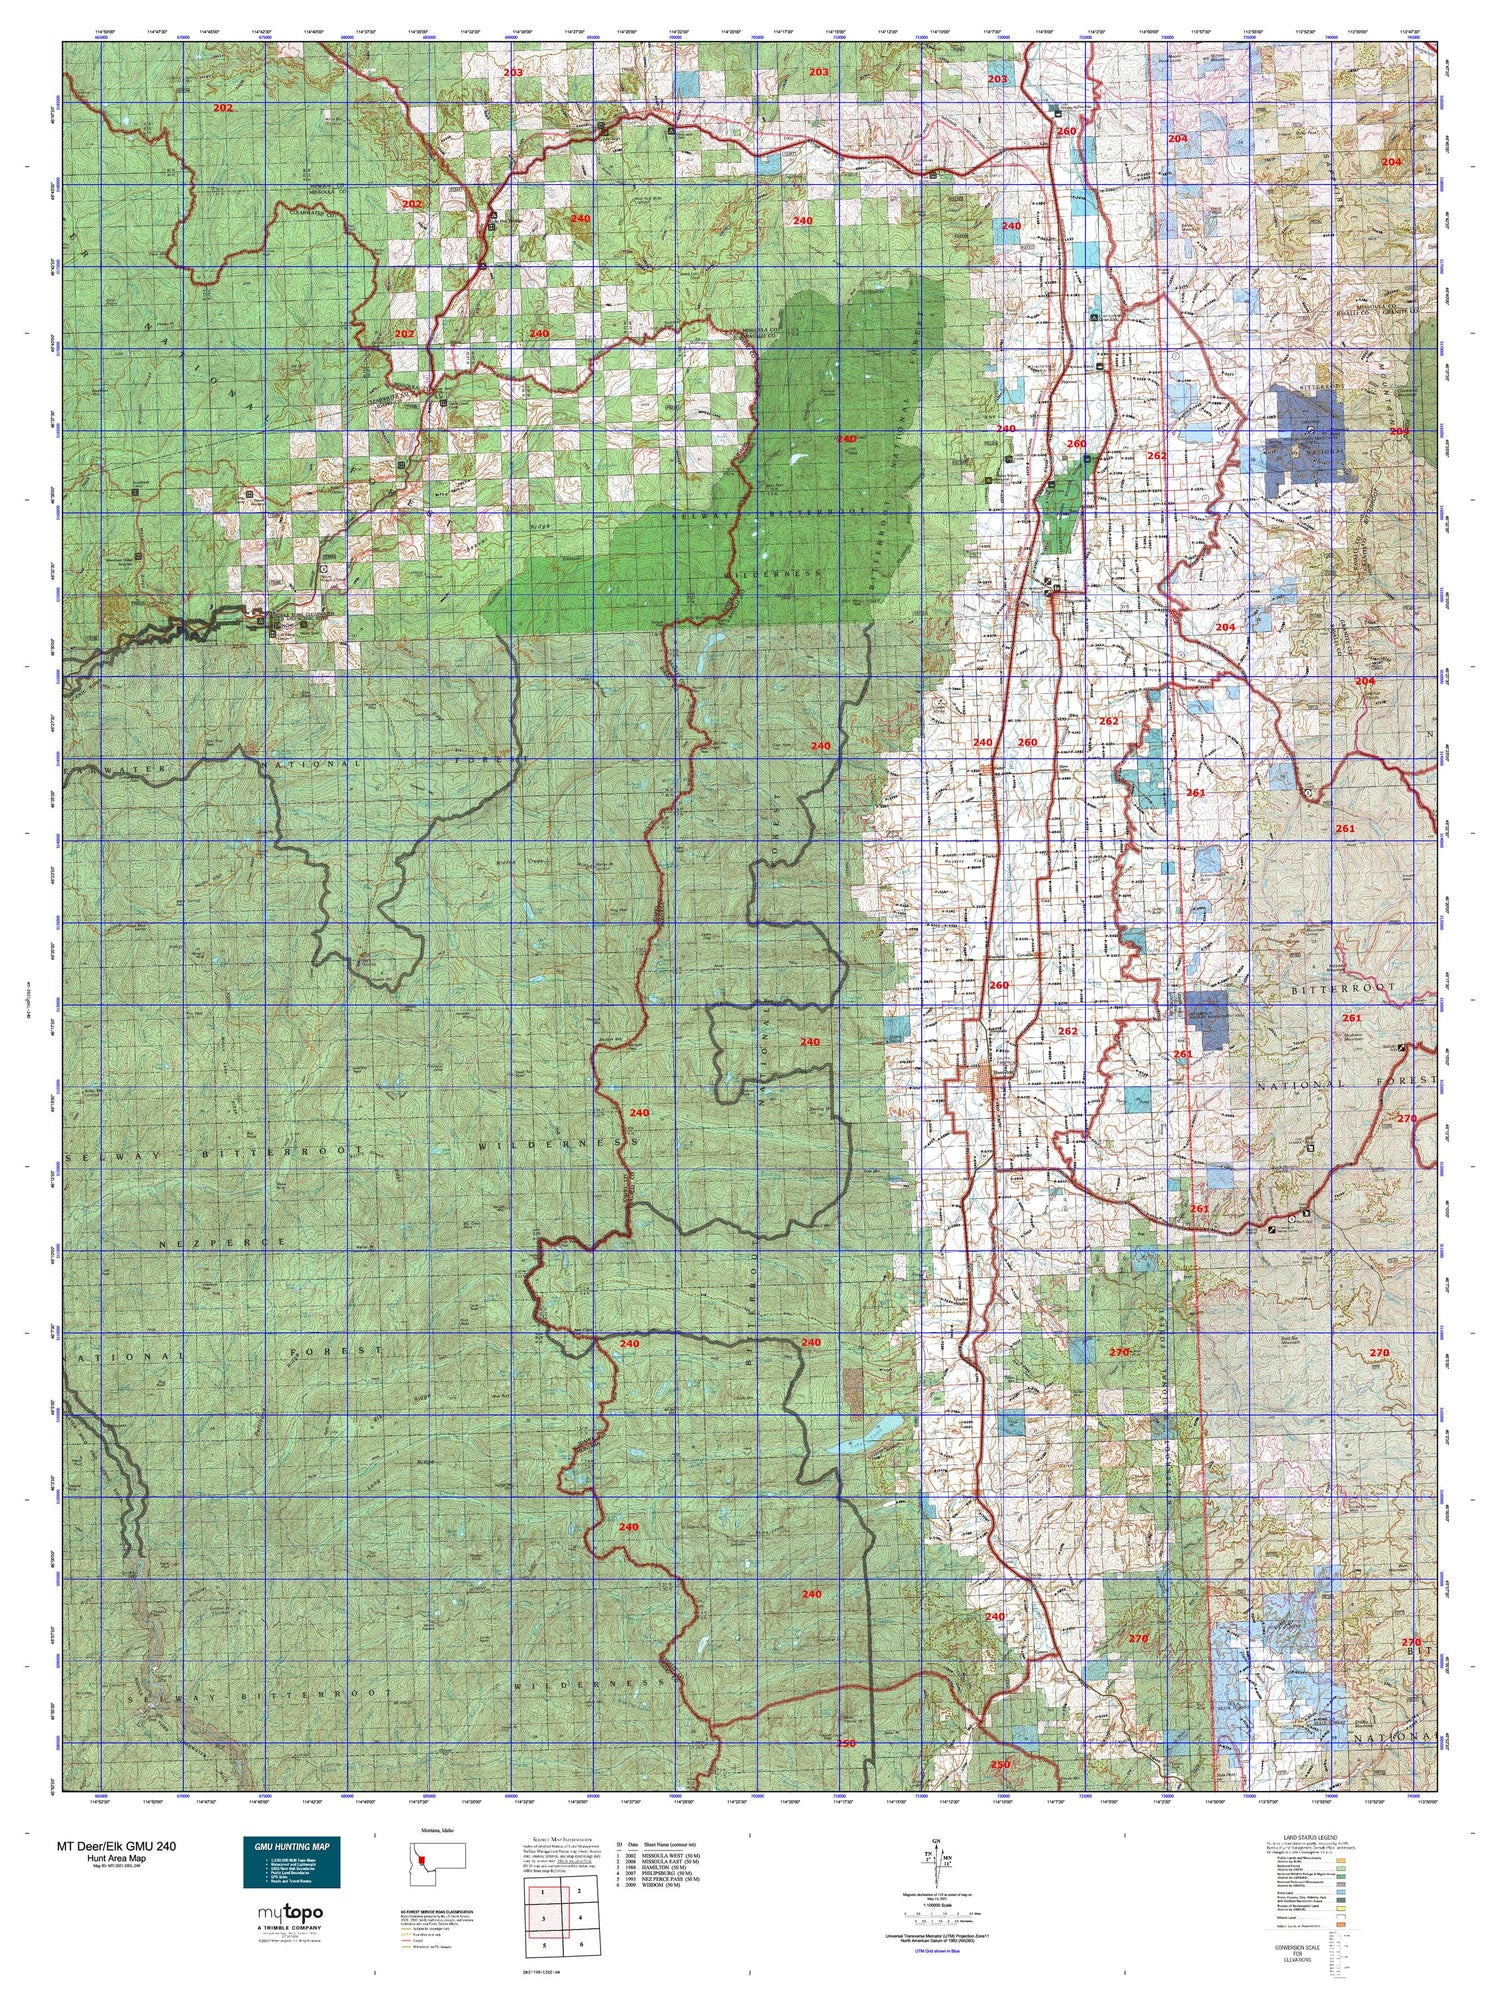 Montana Deer/Elk GMU 240 Map Image